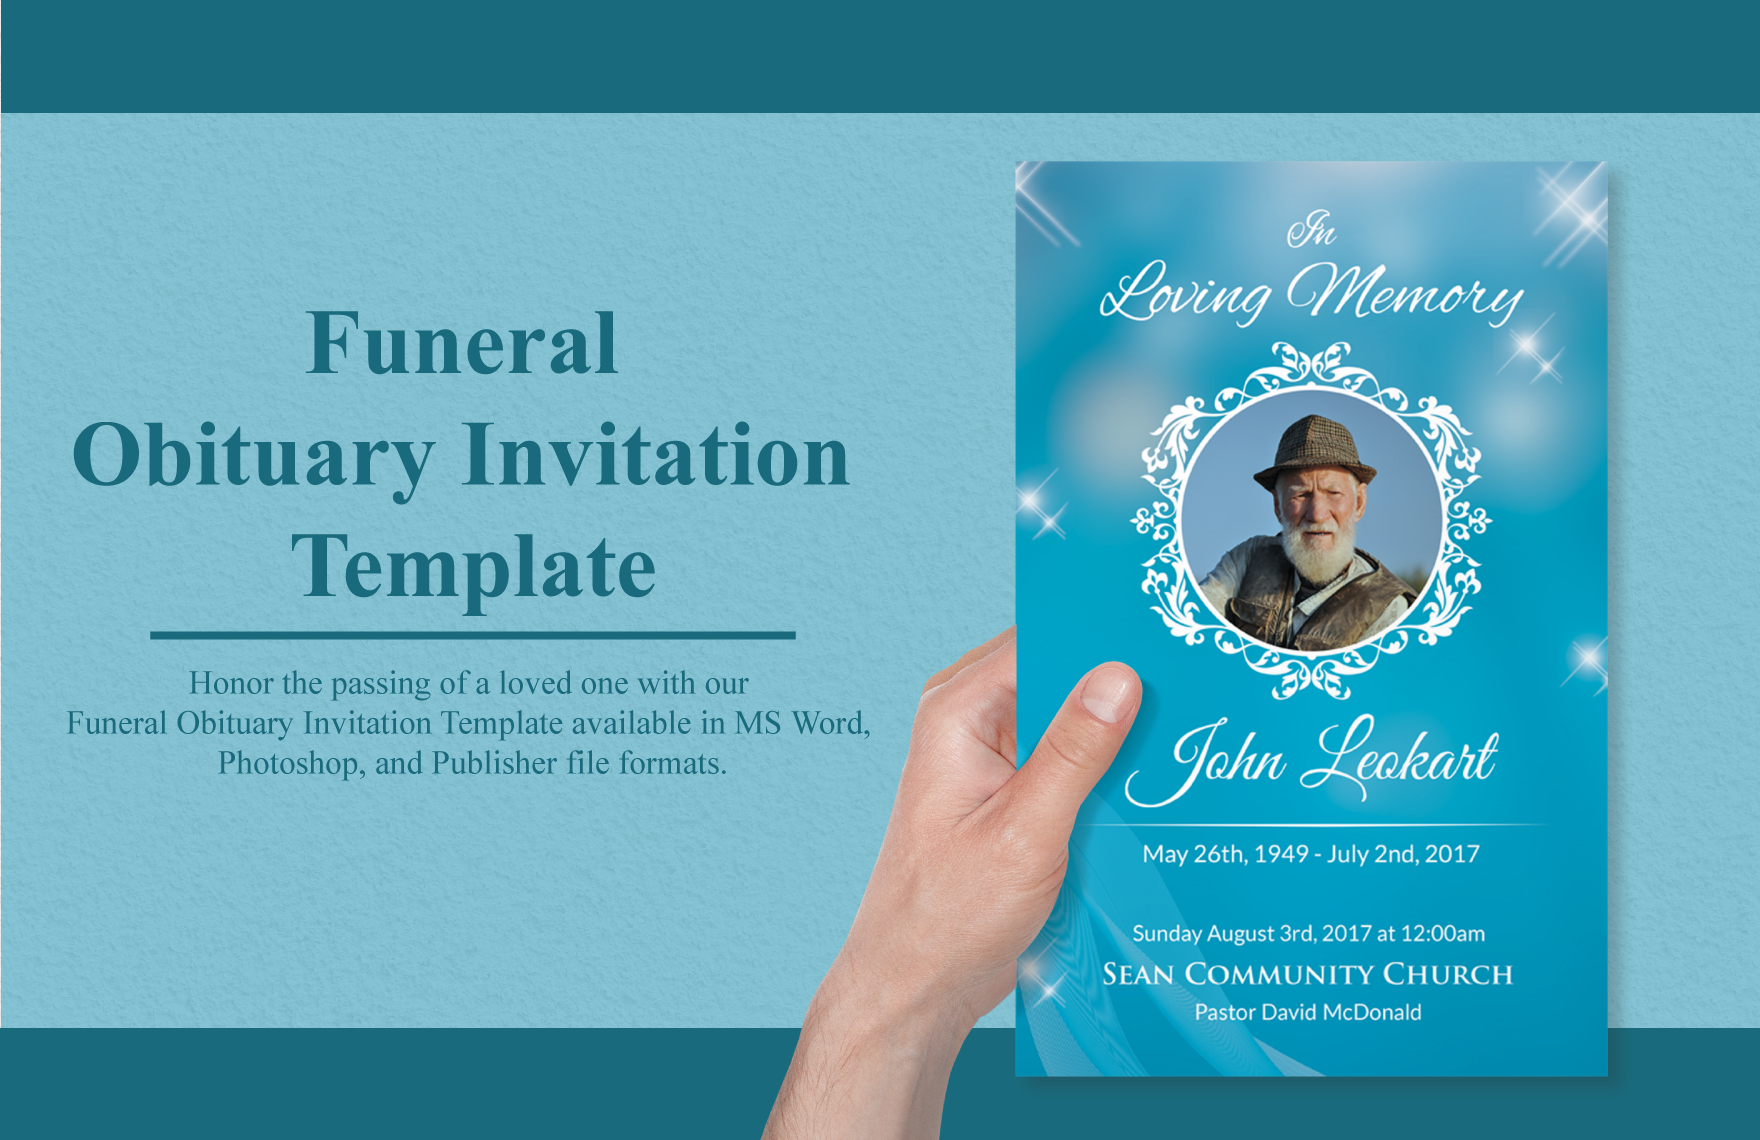 Funeral Obituary Invitation Template